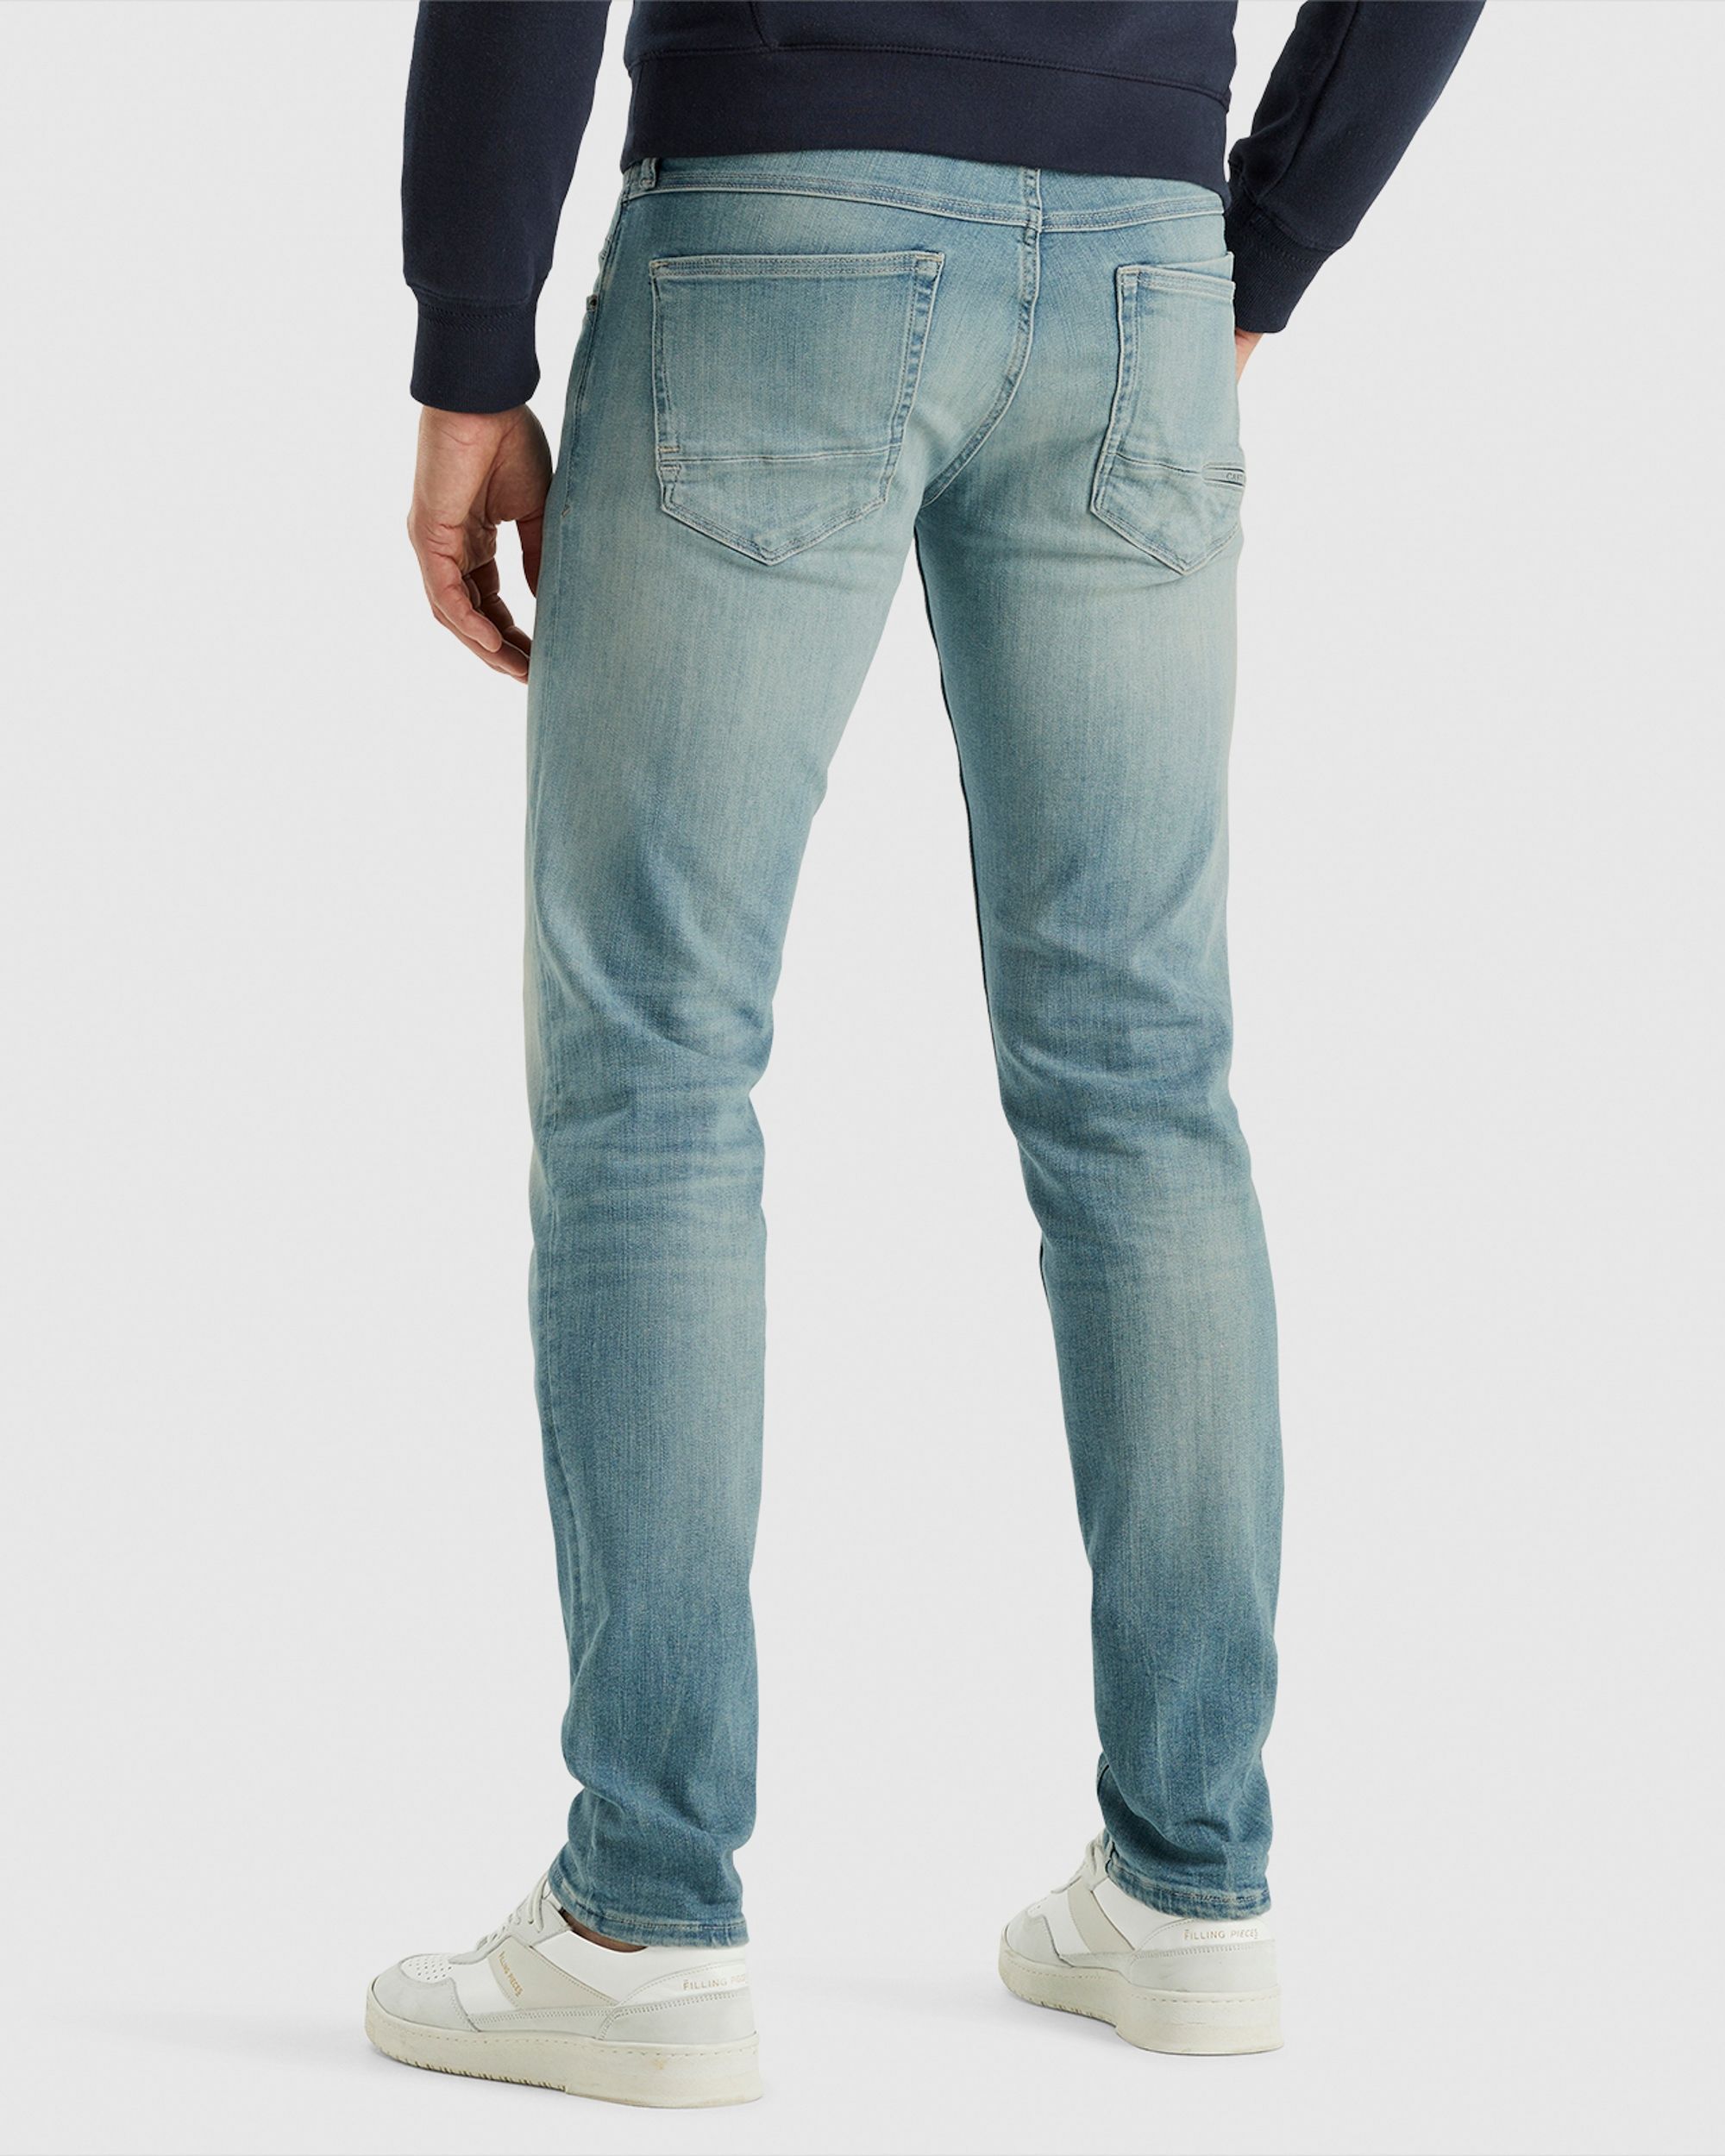 Cast Iron Shiftback Jeans Blauw 092392-001-29/32